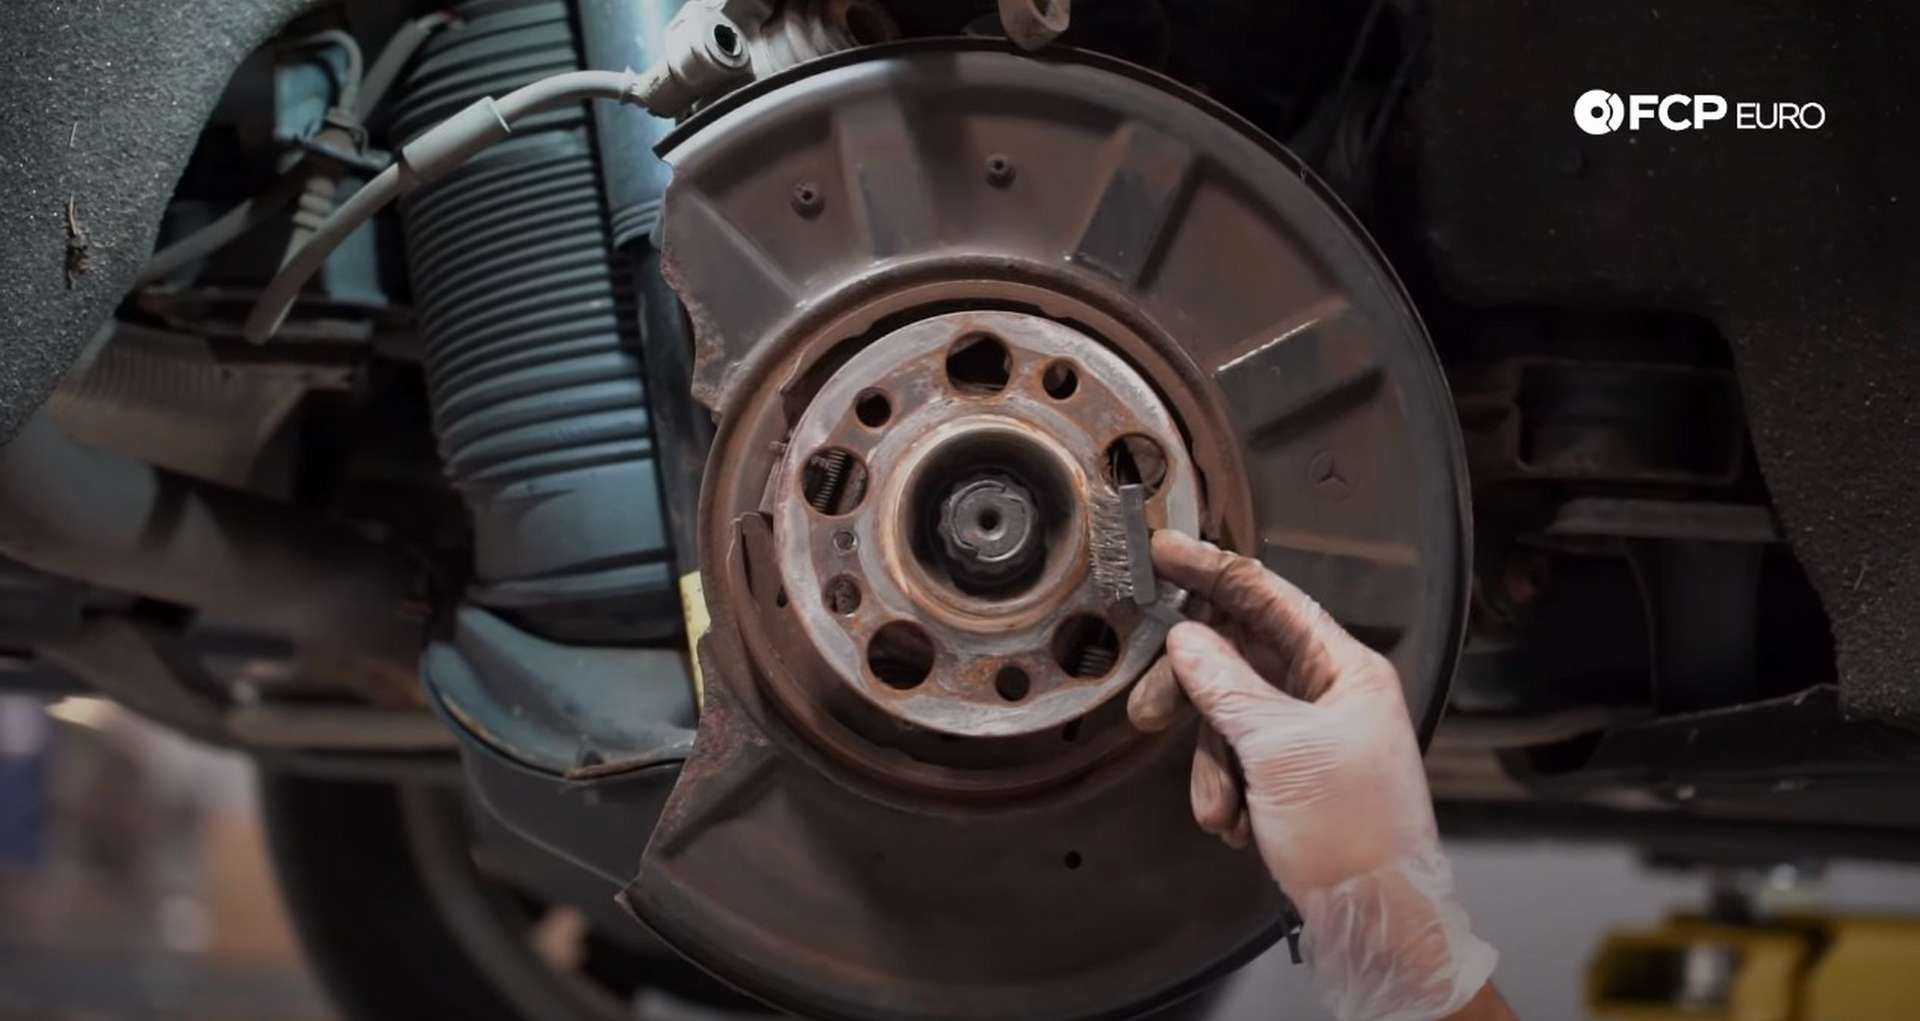 DIY Mercedes W211/212 Rear Brake Job cleaning the wheel hub face